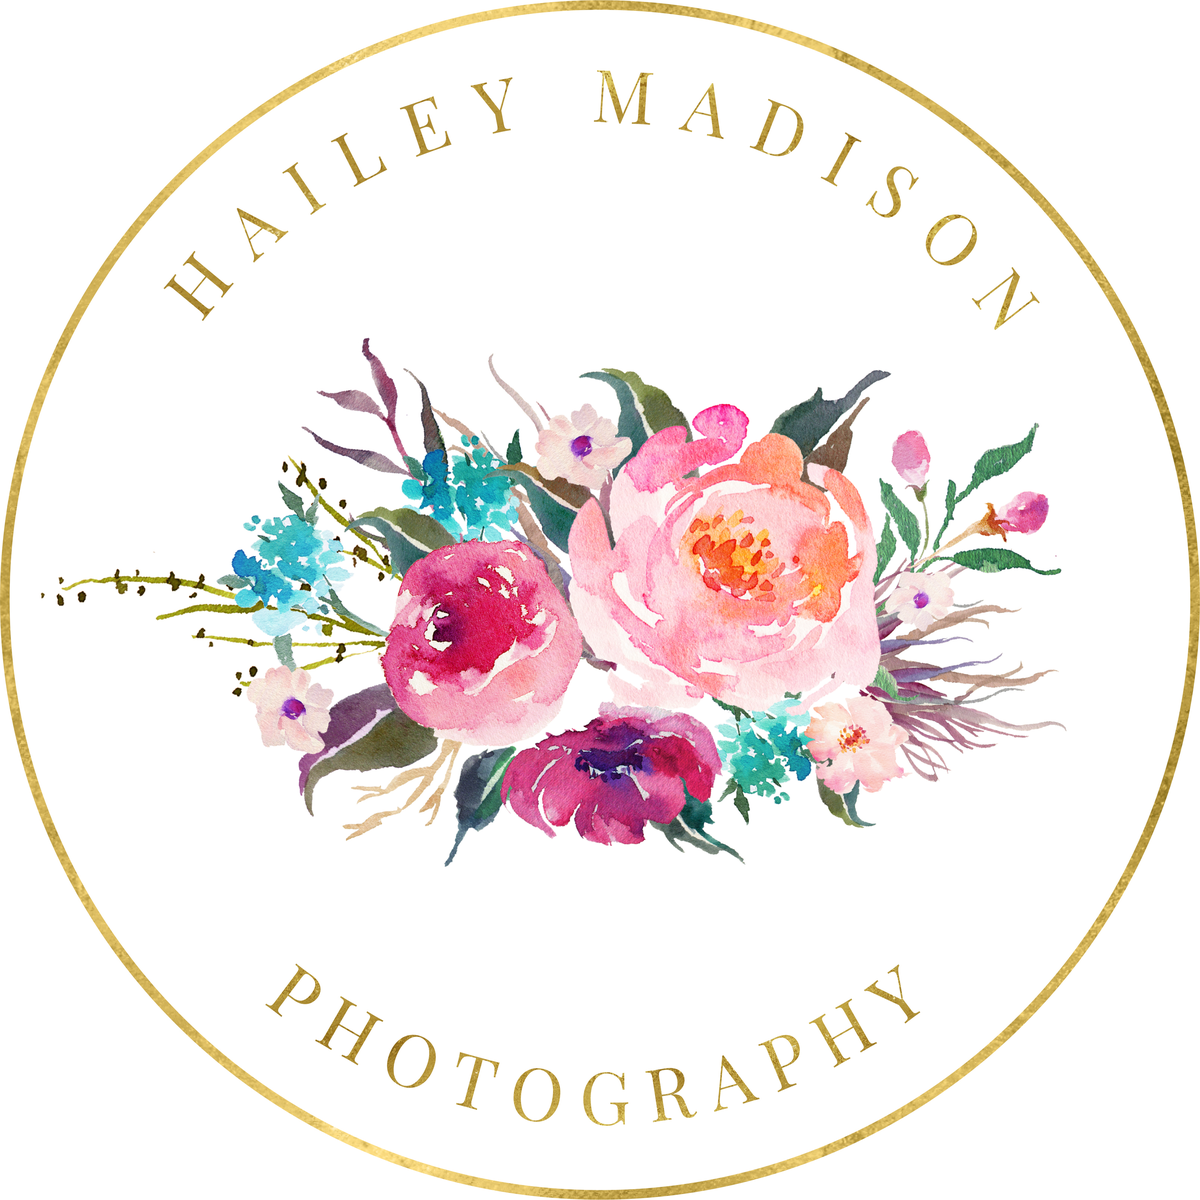 Hailey Madison Photography